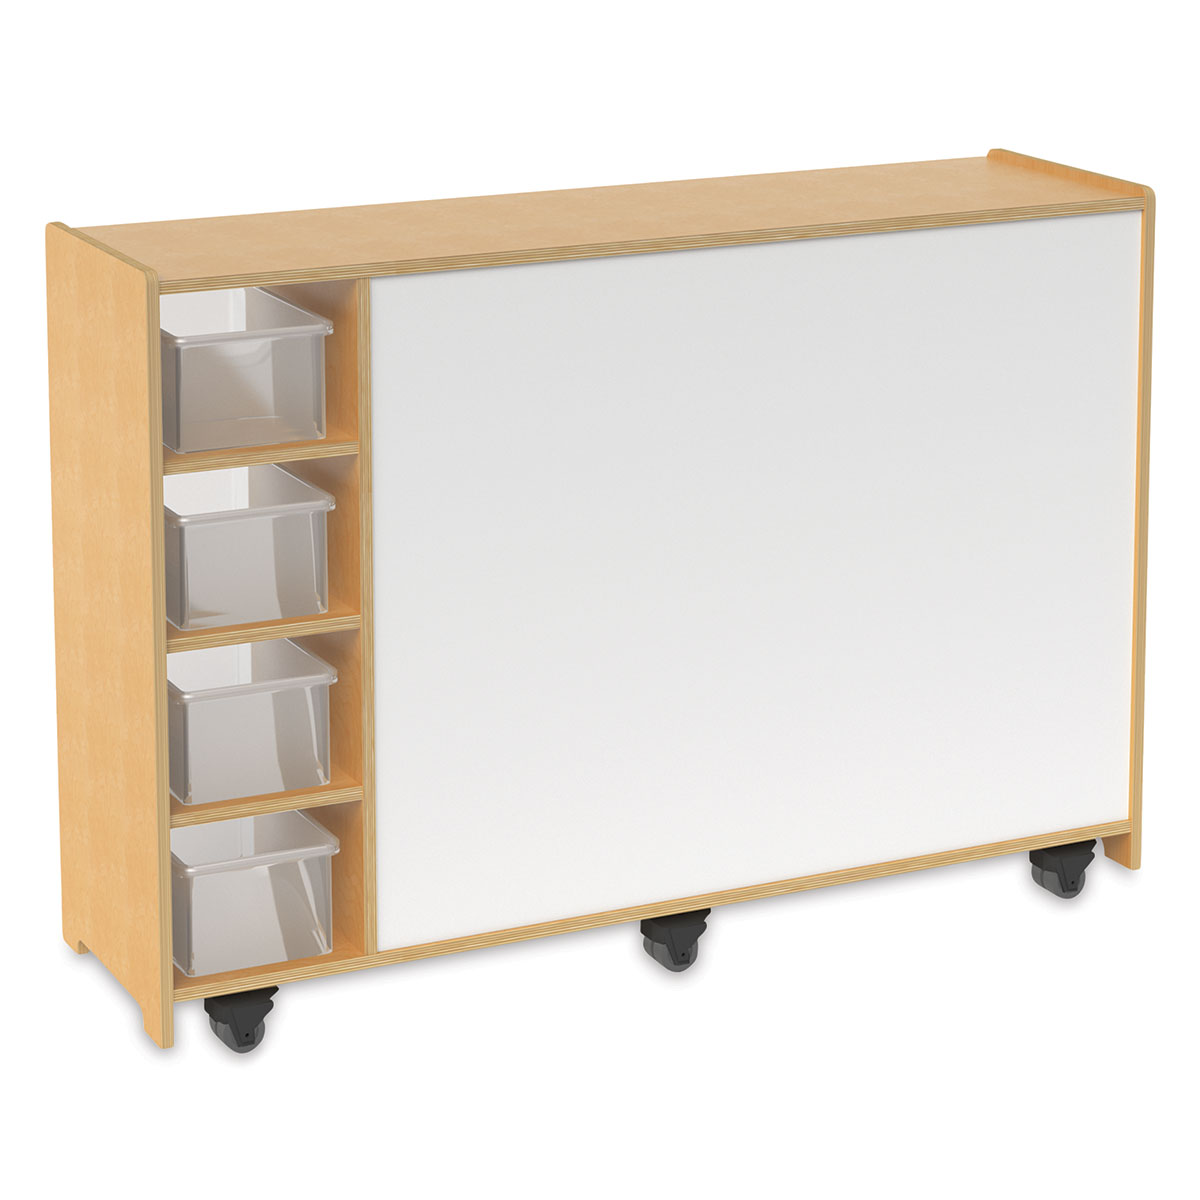 Teacher Wardrobe Storage Cabinet by Whitney Brothers - WB1810